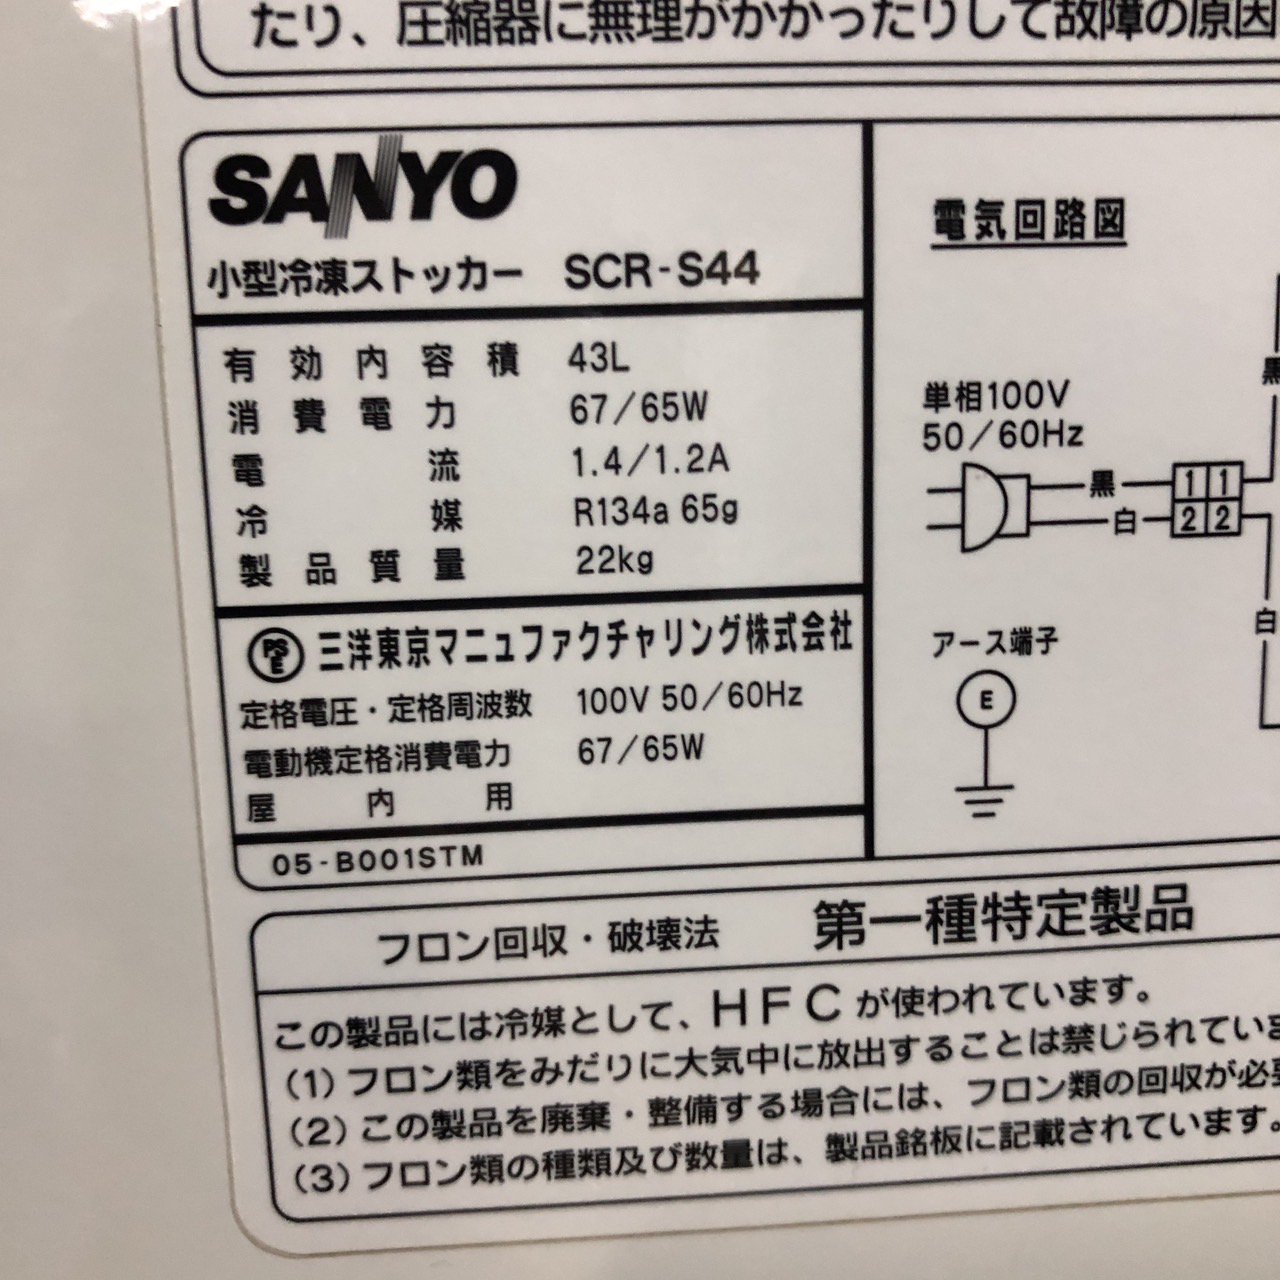 ☆SANYO 小型冷凍ストッカー☆43L SCR-S44 ホワイト 2008年製(NO.0721 